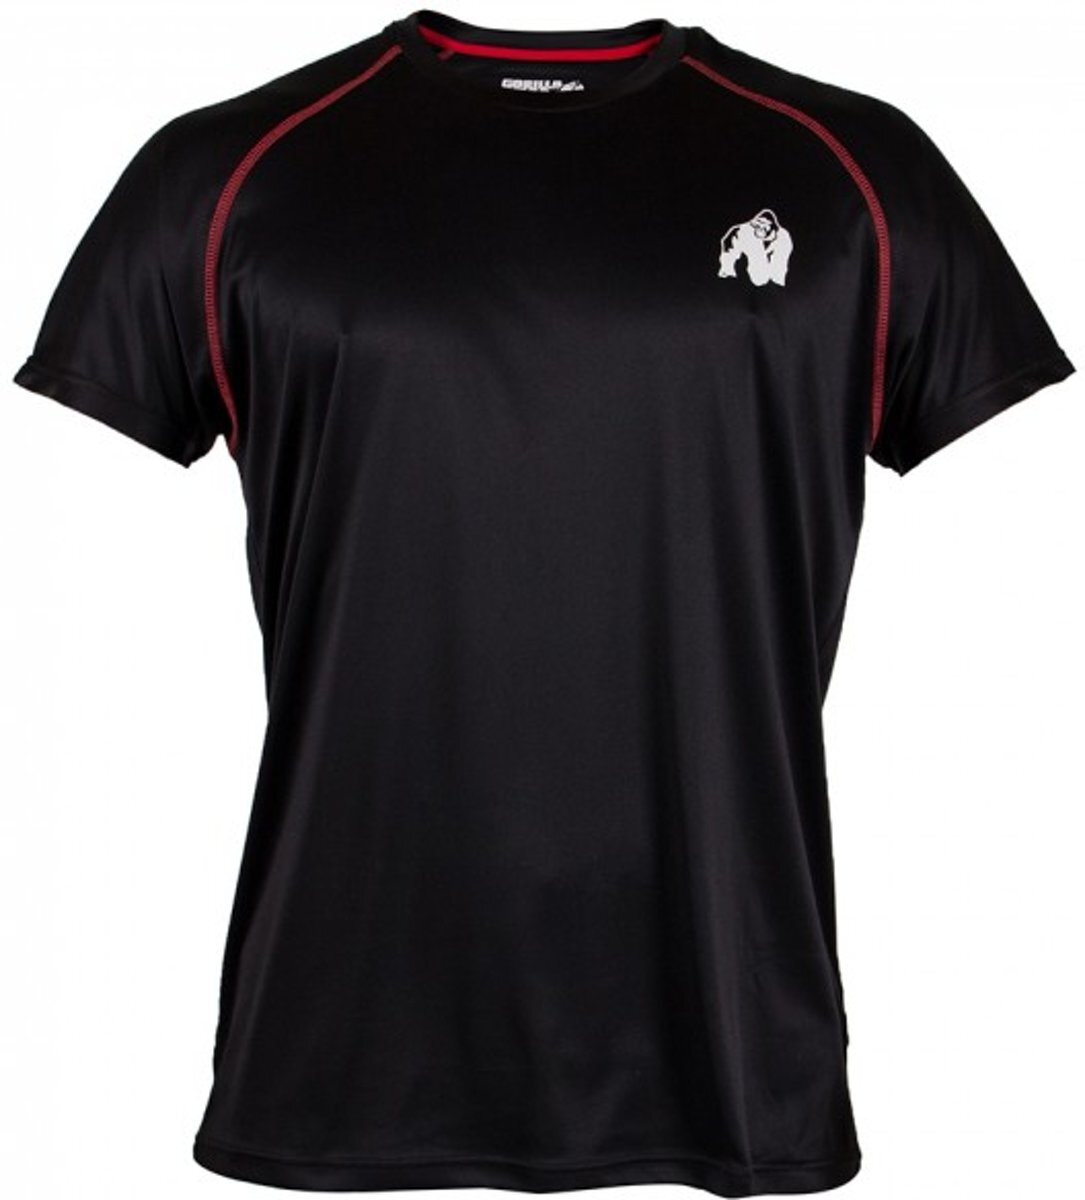 Gorilla Wear Performance t-shirt Black/red - XXXL